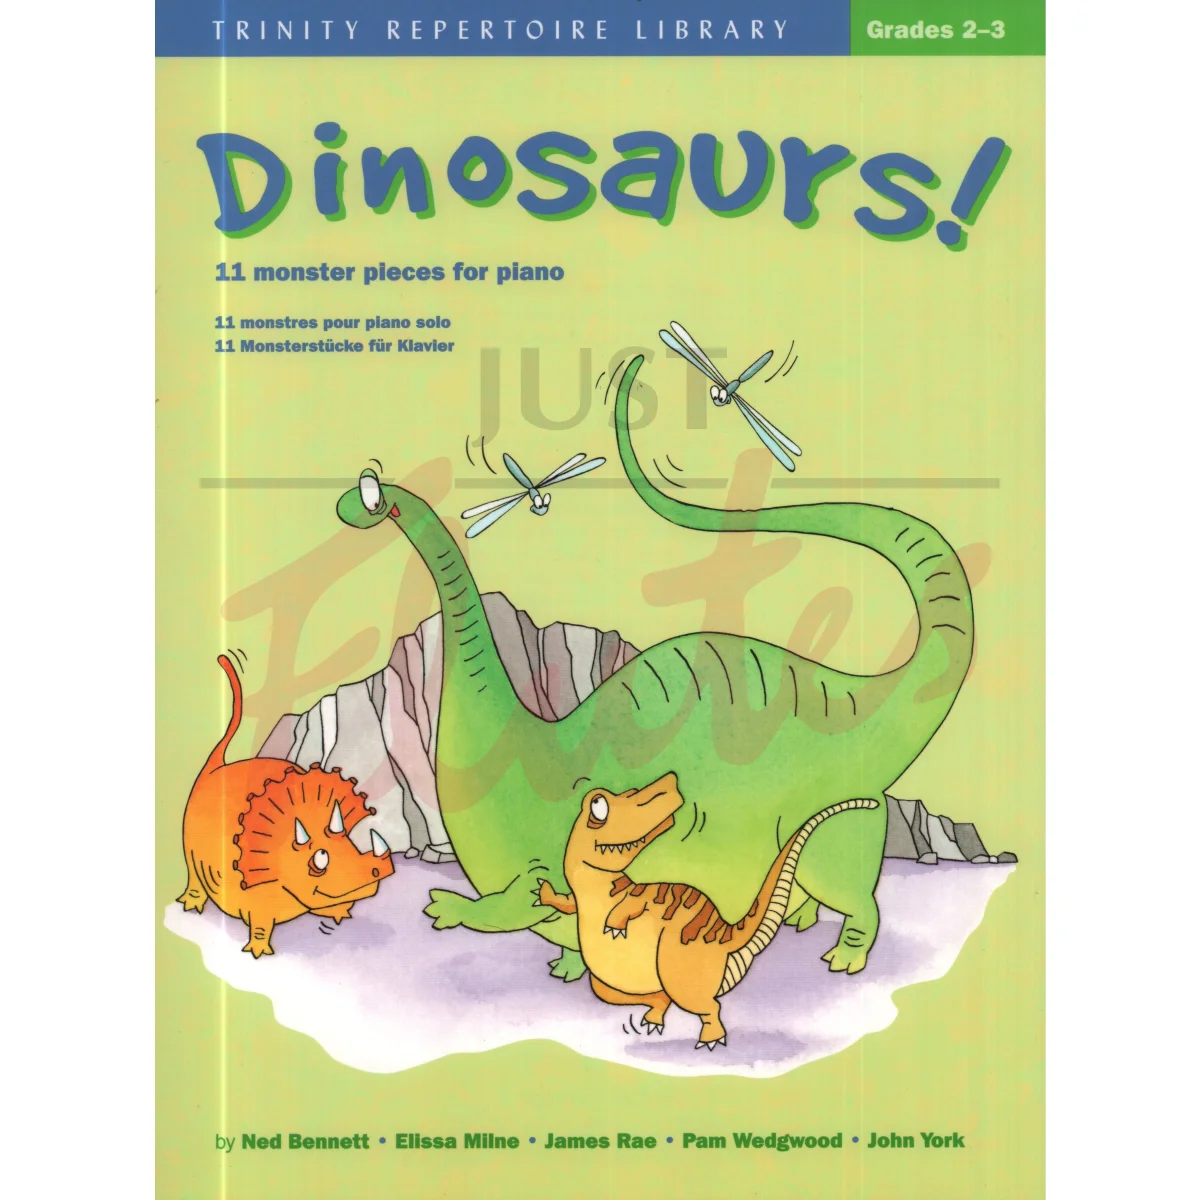 Dinosaurs! Grades 2-3 for Piano